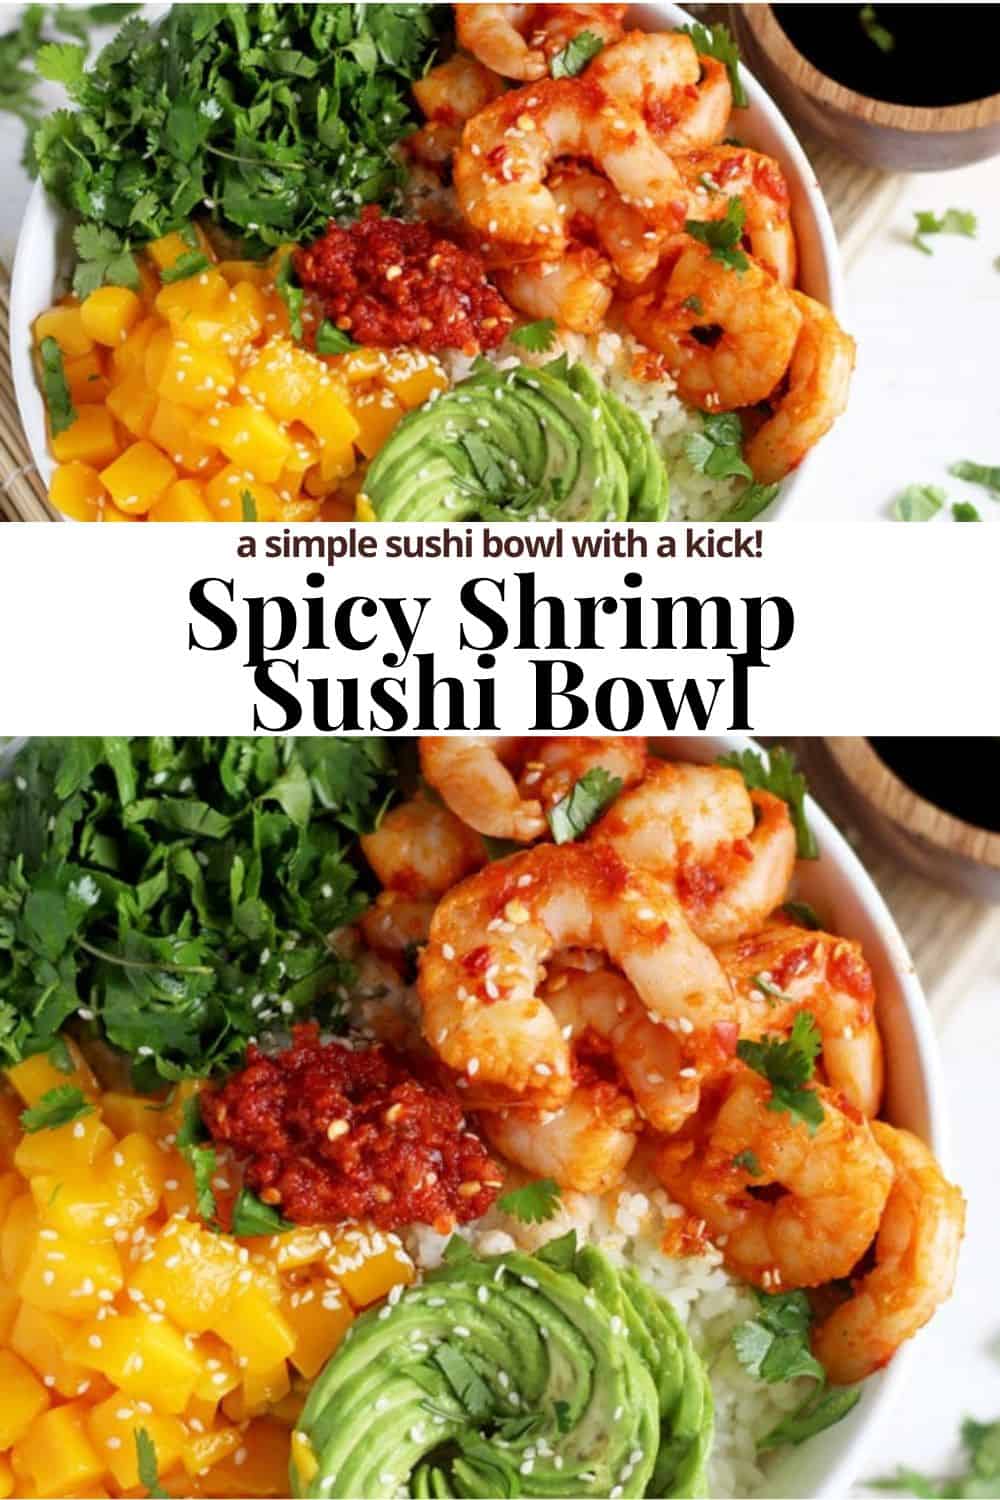 Pinterest image for a spicy shrimp sushi bowl.